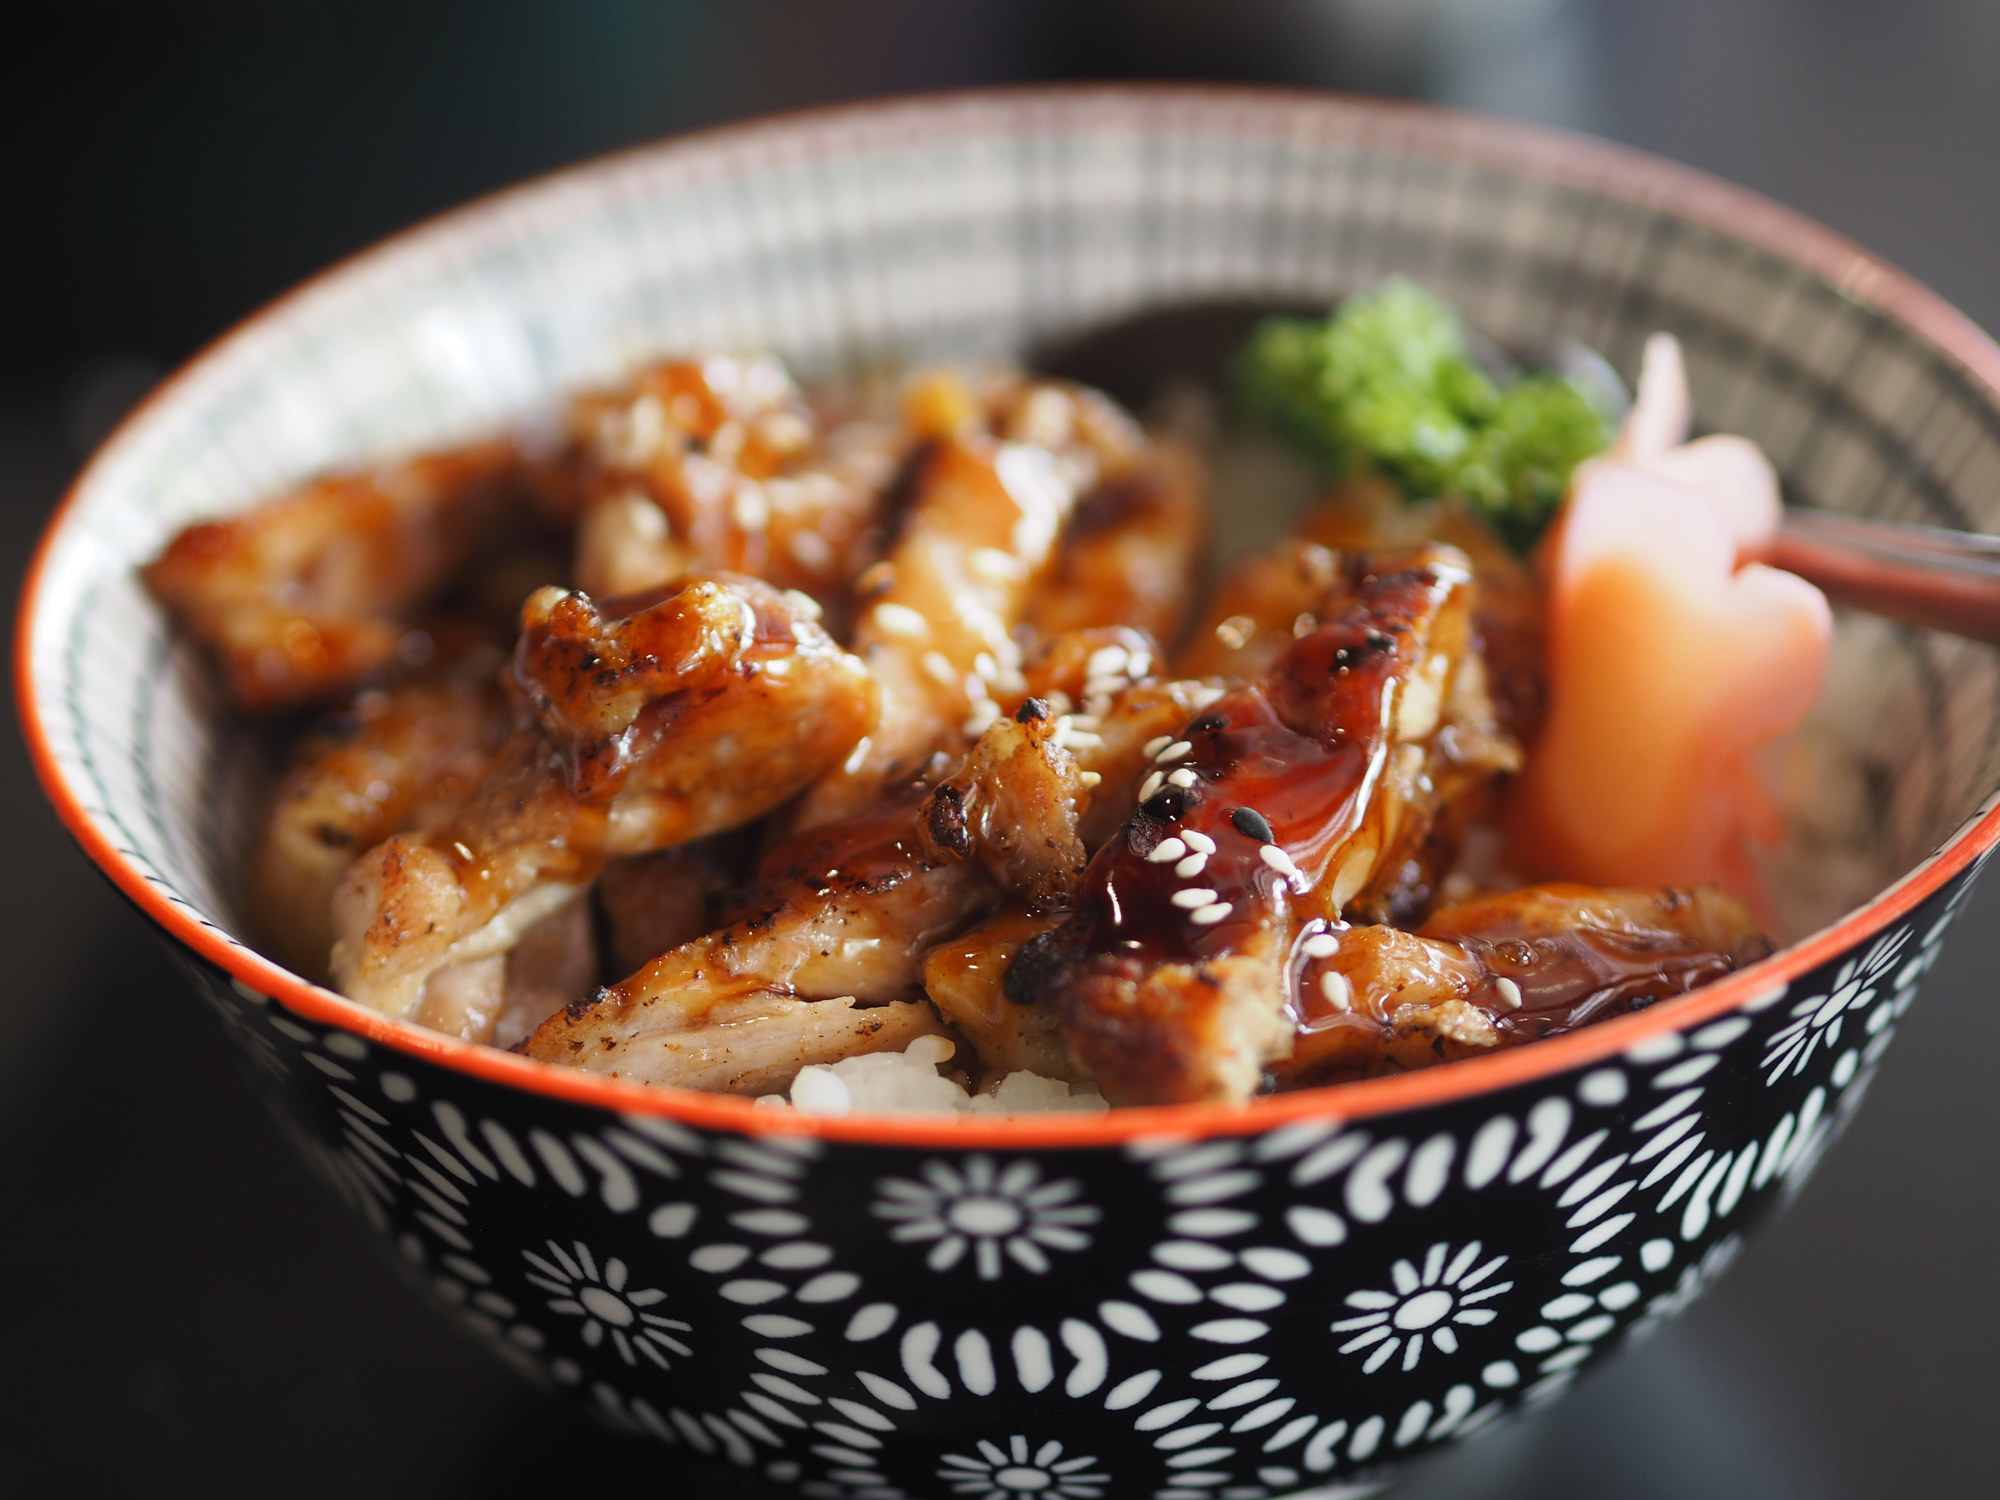 Chicken teriyaki over rice in a bowl